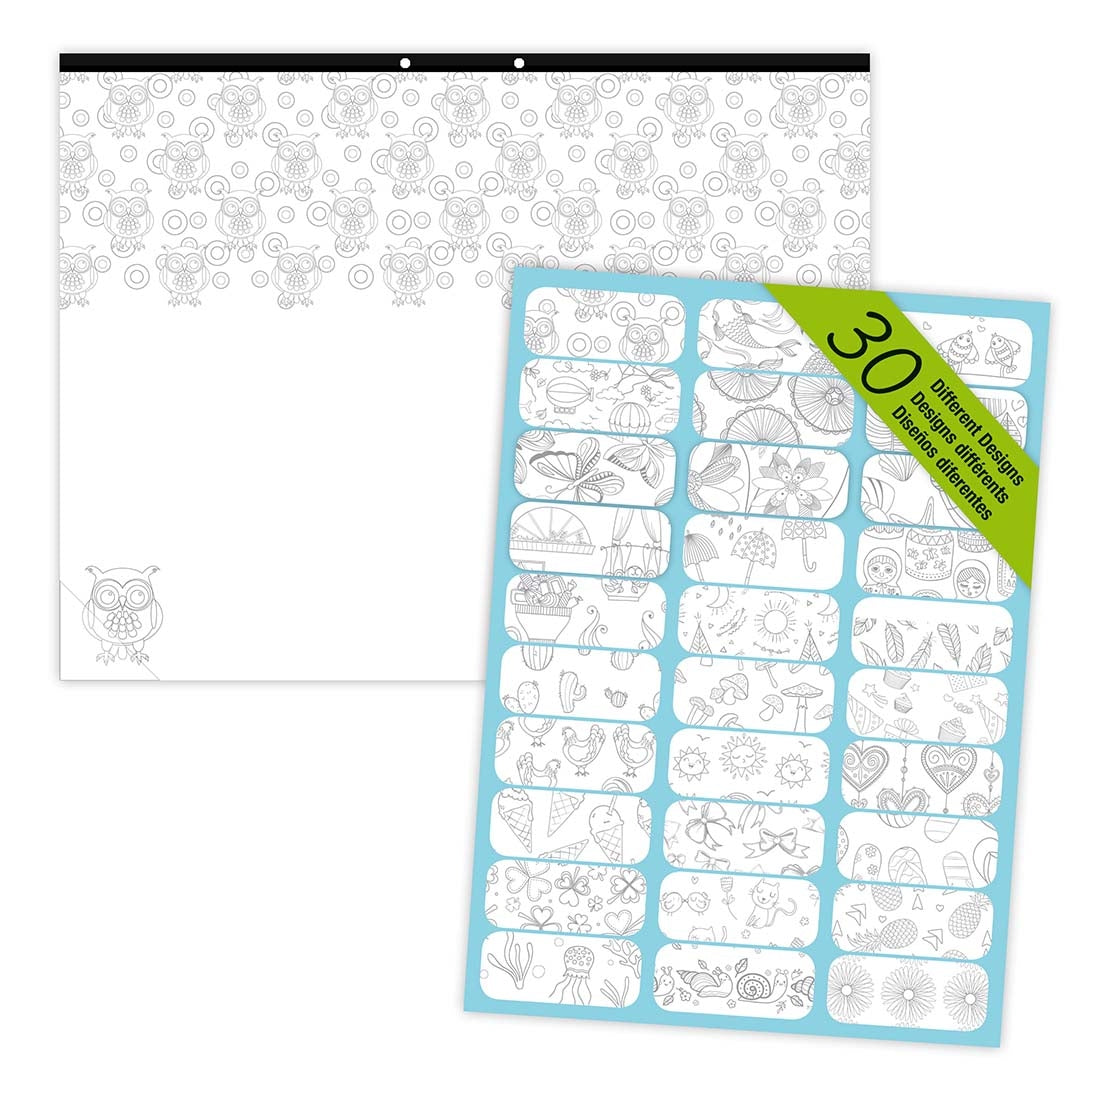 DoodlePlan™Coloring Desk Pad - Undated#color_multiplicity